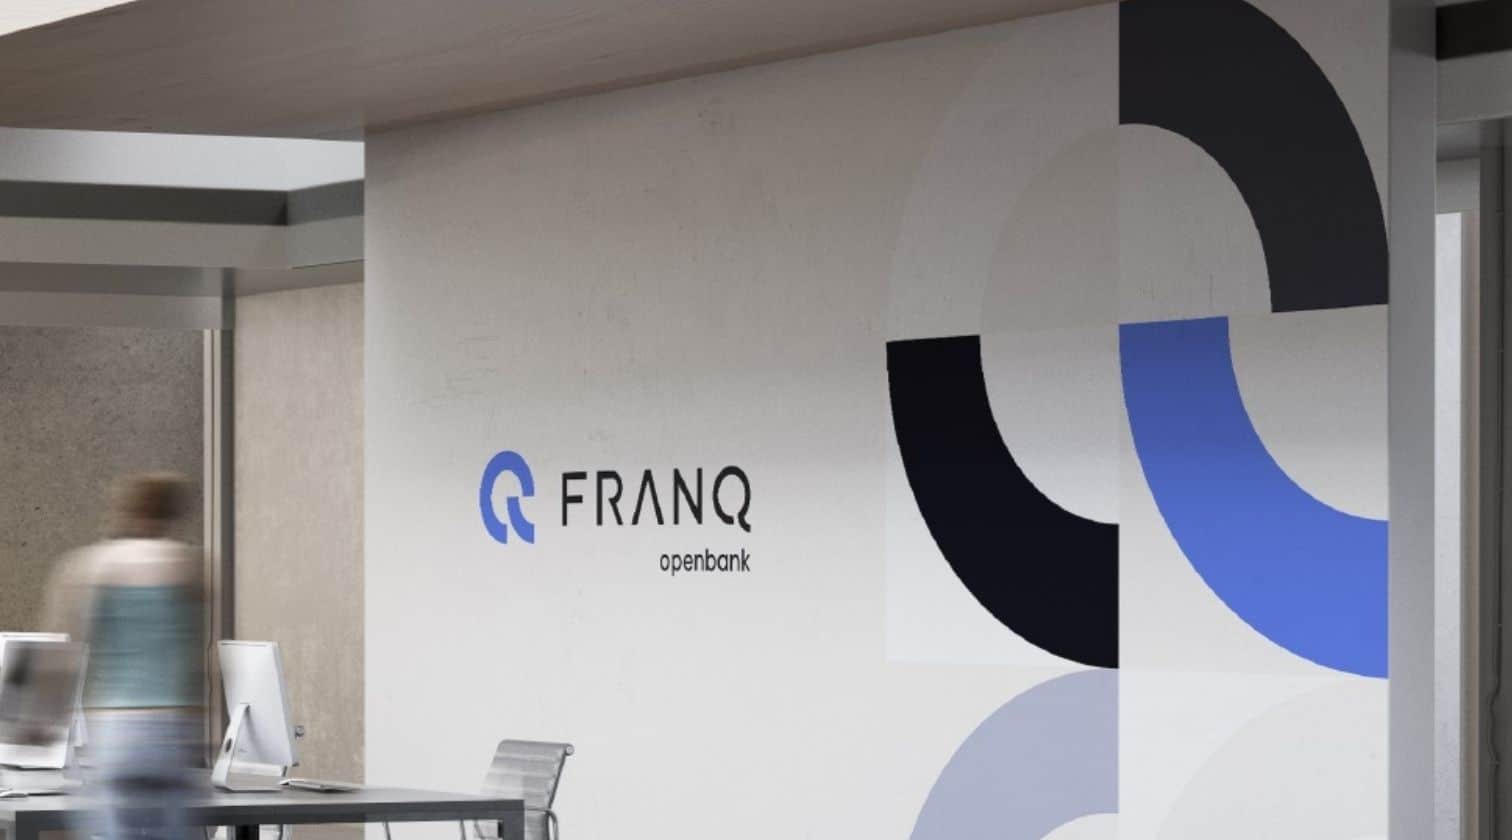 Franq Openbank